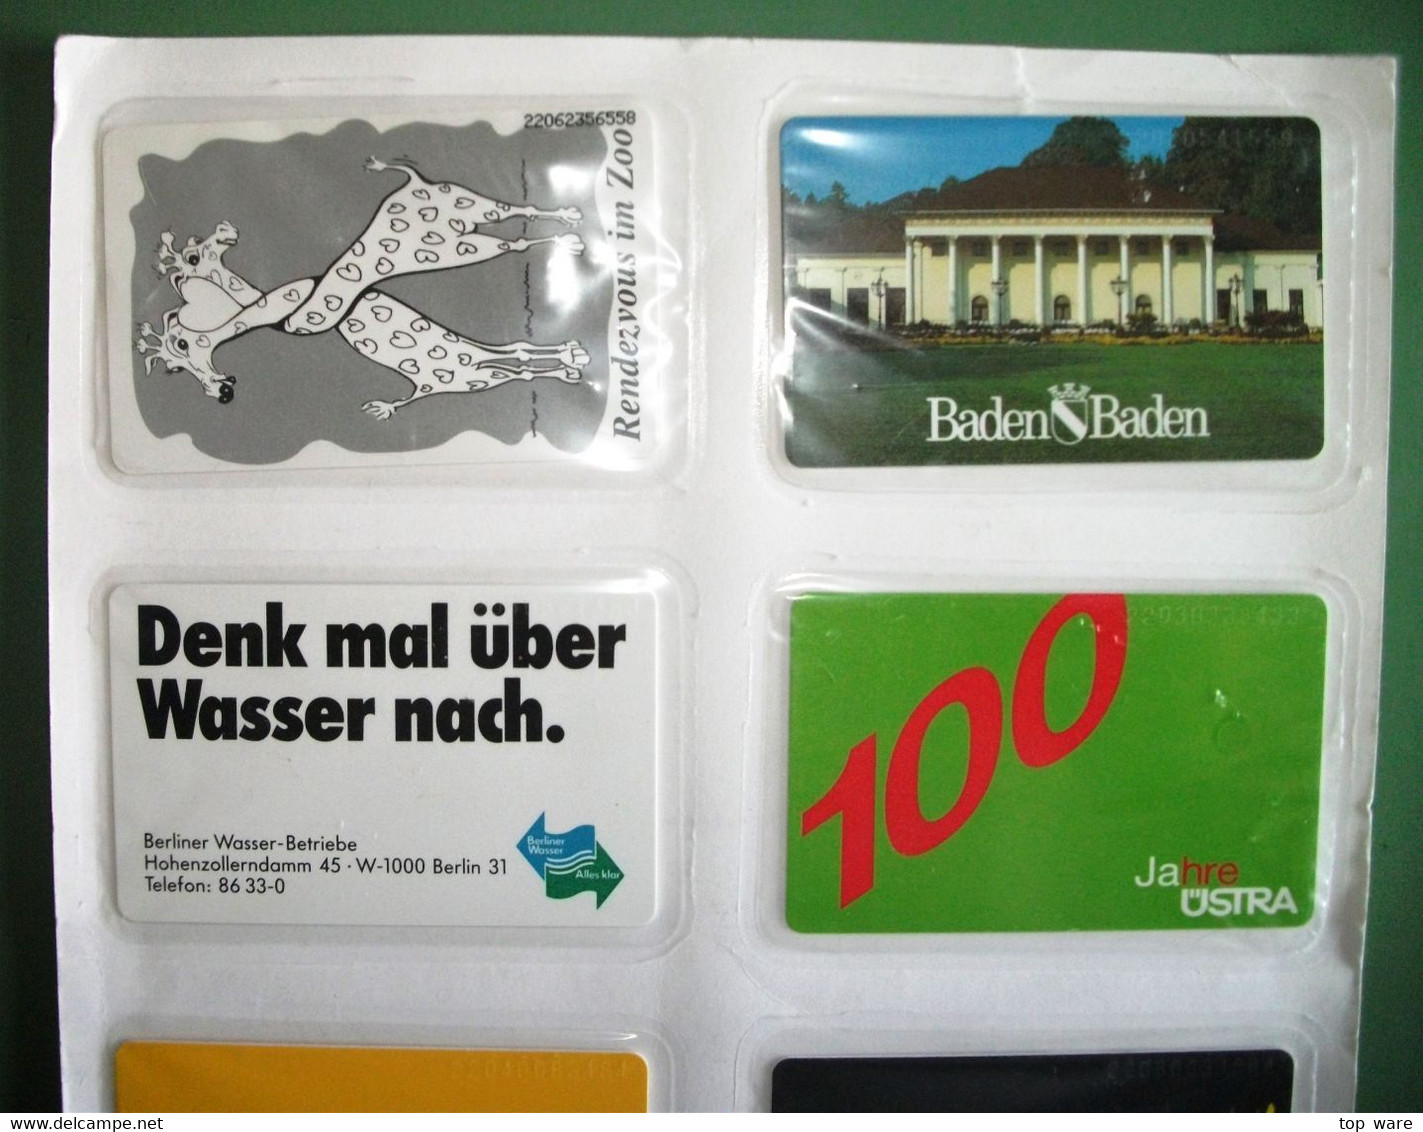 8 Telefonkarten Aus 1992 - S41 S44 S45 S47 S48 S49 S52 S57  - Original Verschweißt Vom Zentralen Kartenservice - [6] Collections